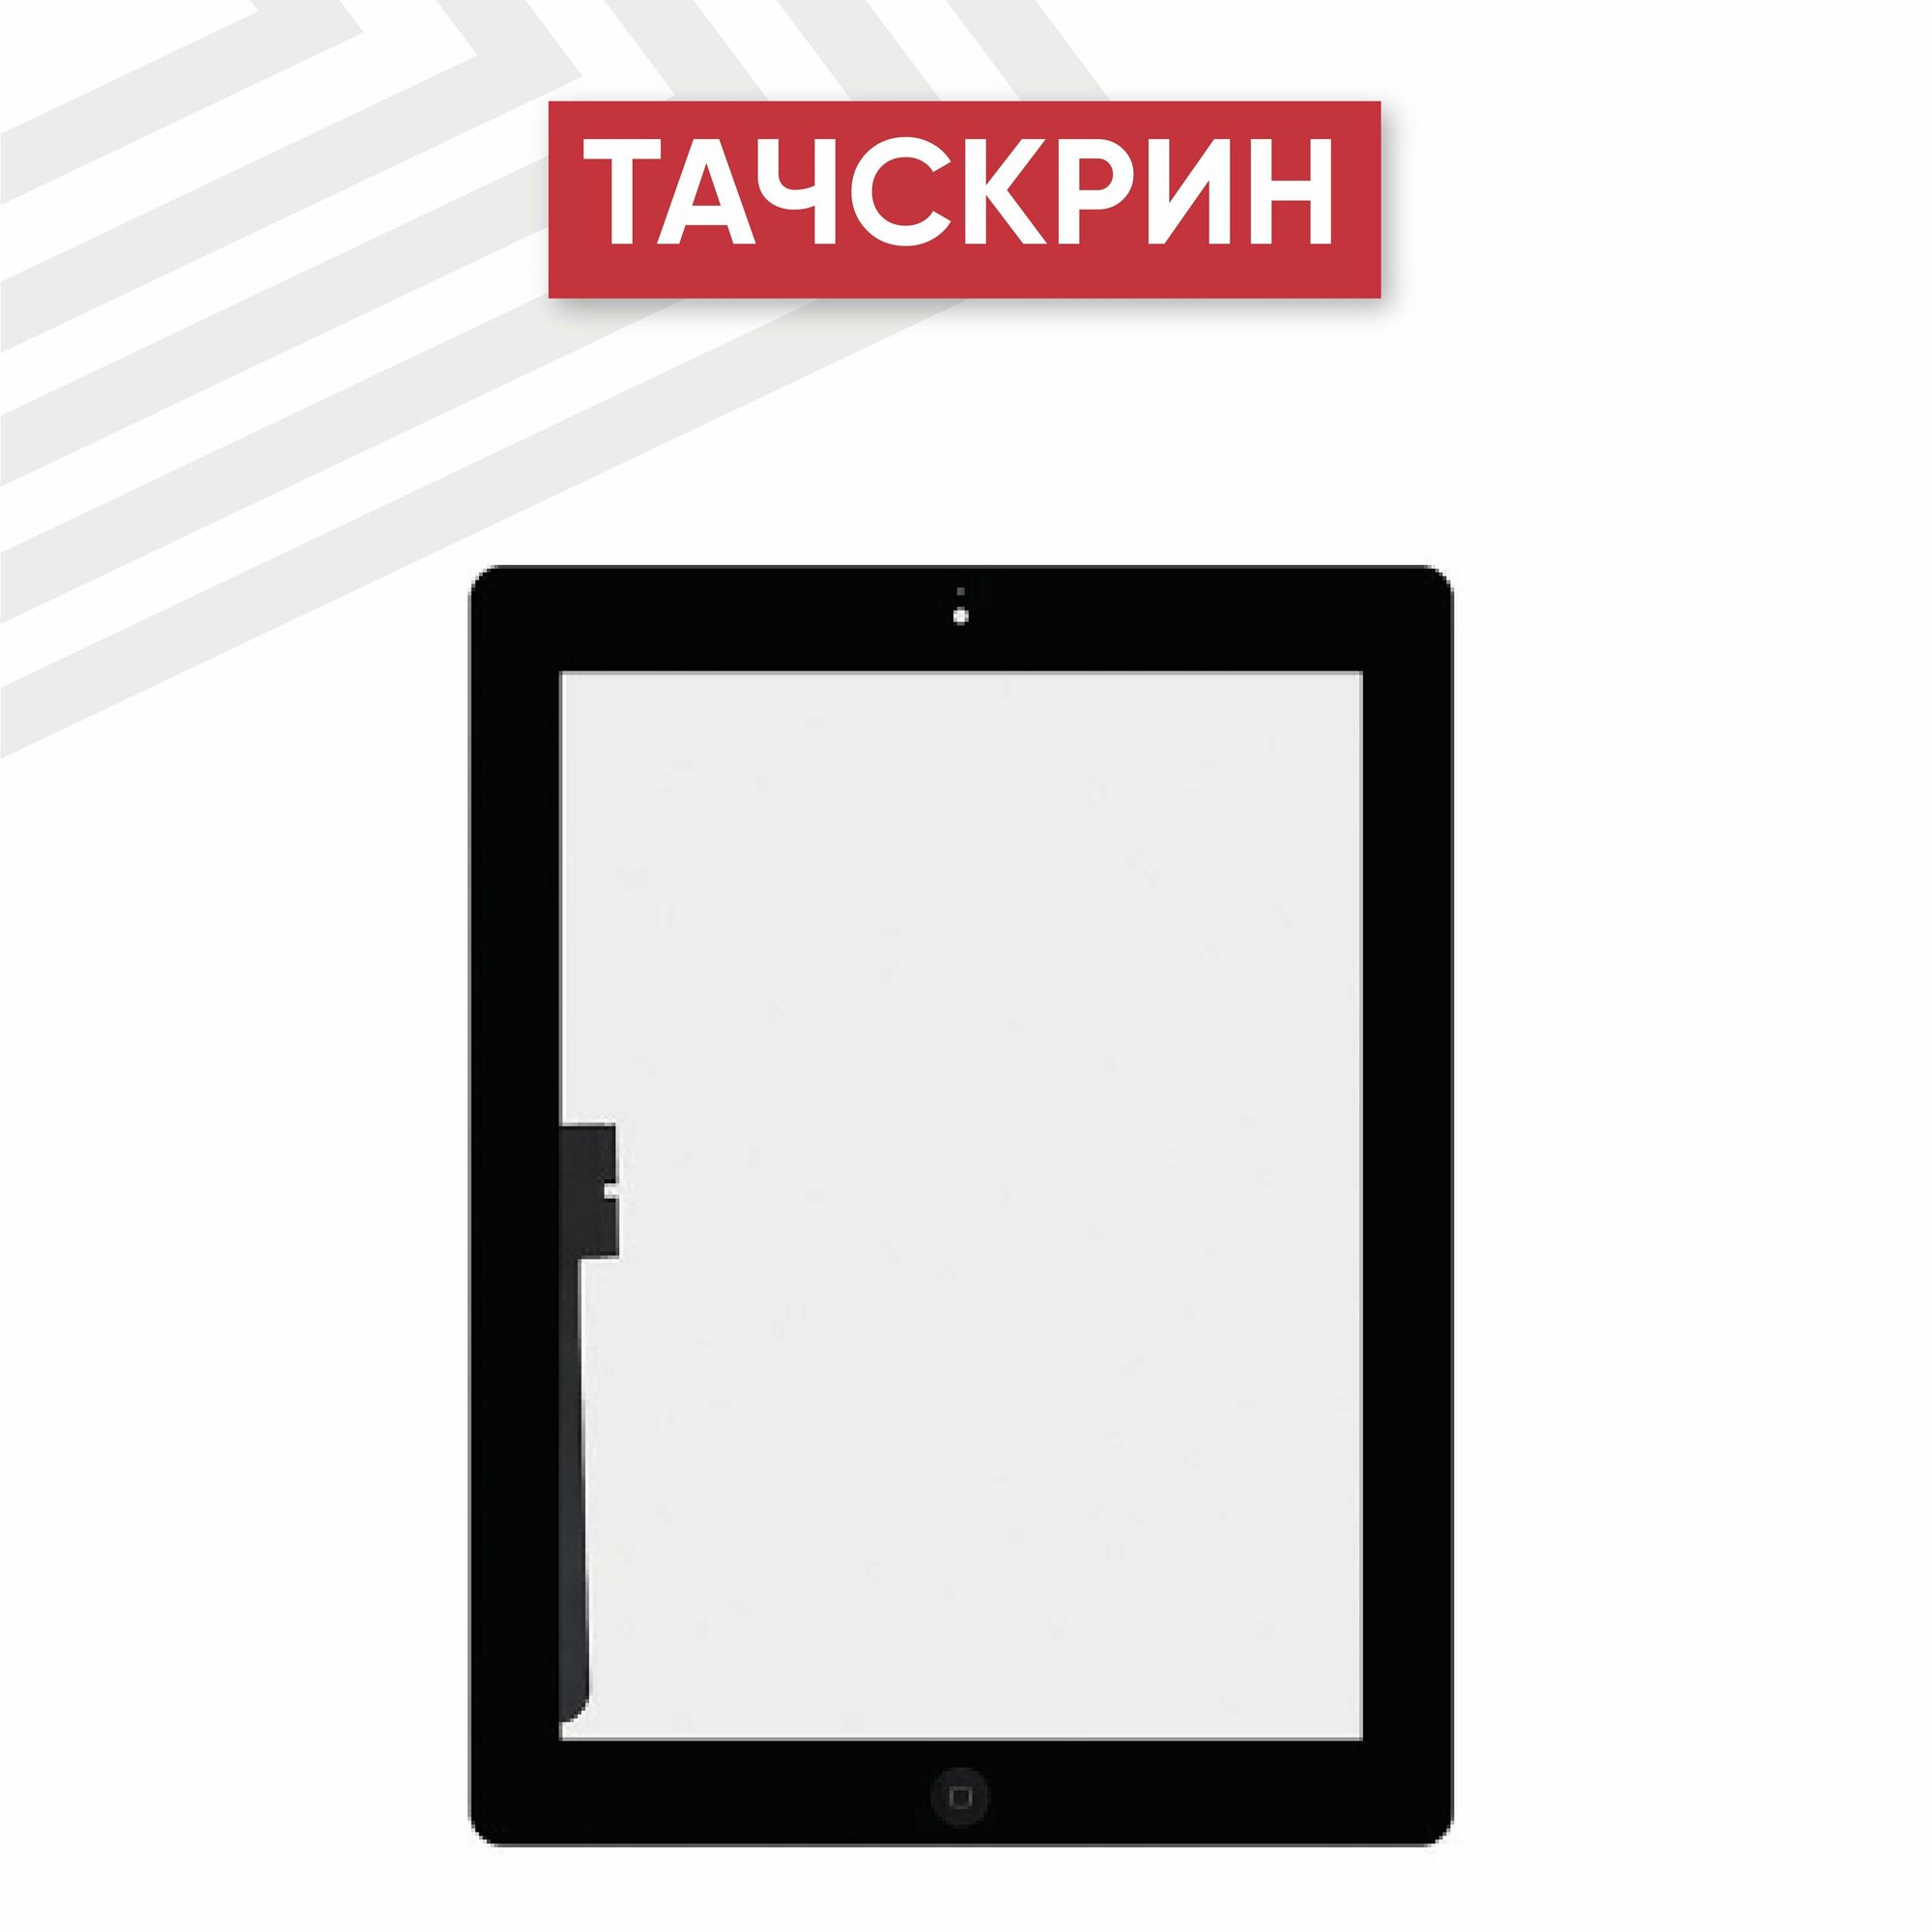 Тачскрин (сенсорное стекло) для планшета Apple iPad 3 (A1416, A1430, A1403) с кнопкой Home, класс AAA, 9.7", черный